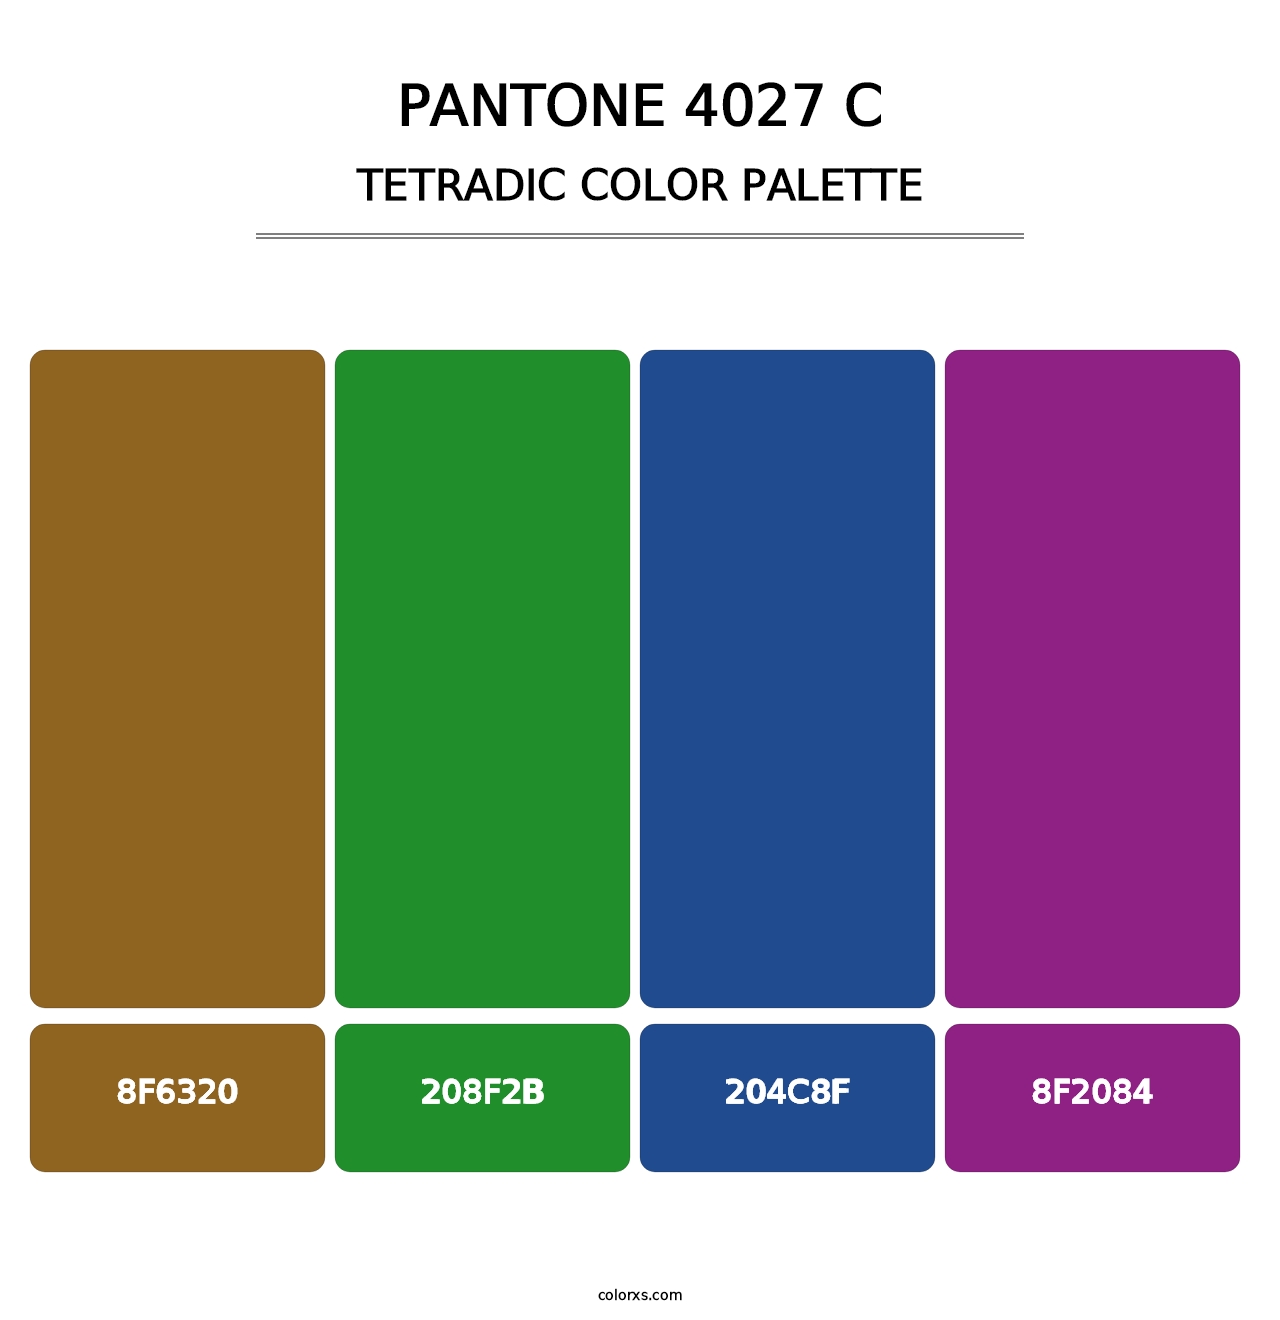 PANTONE 4027 C - Tetradic Color Palette